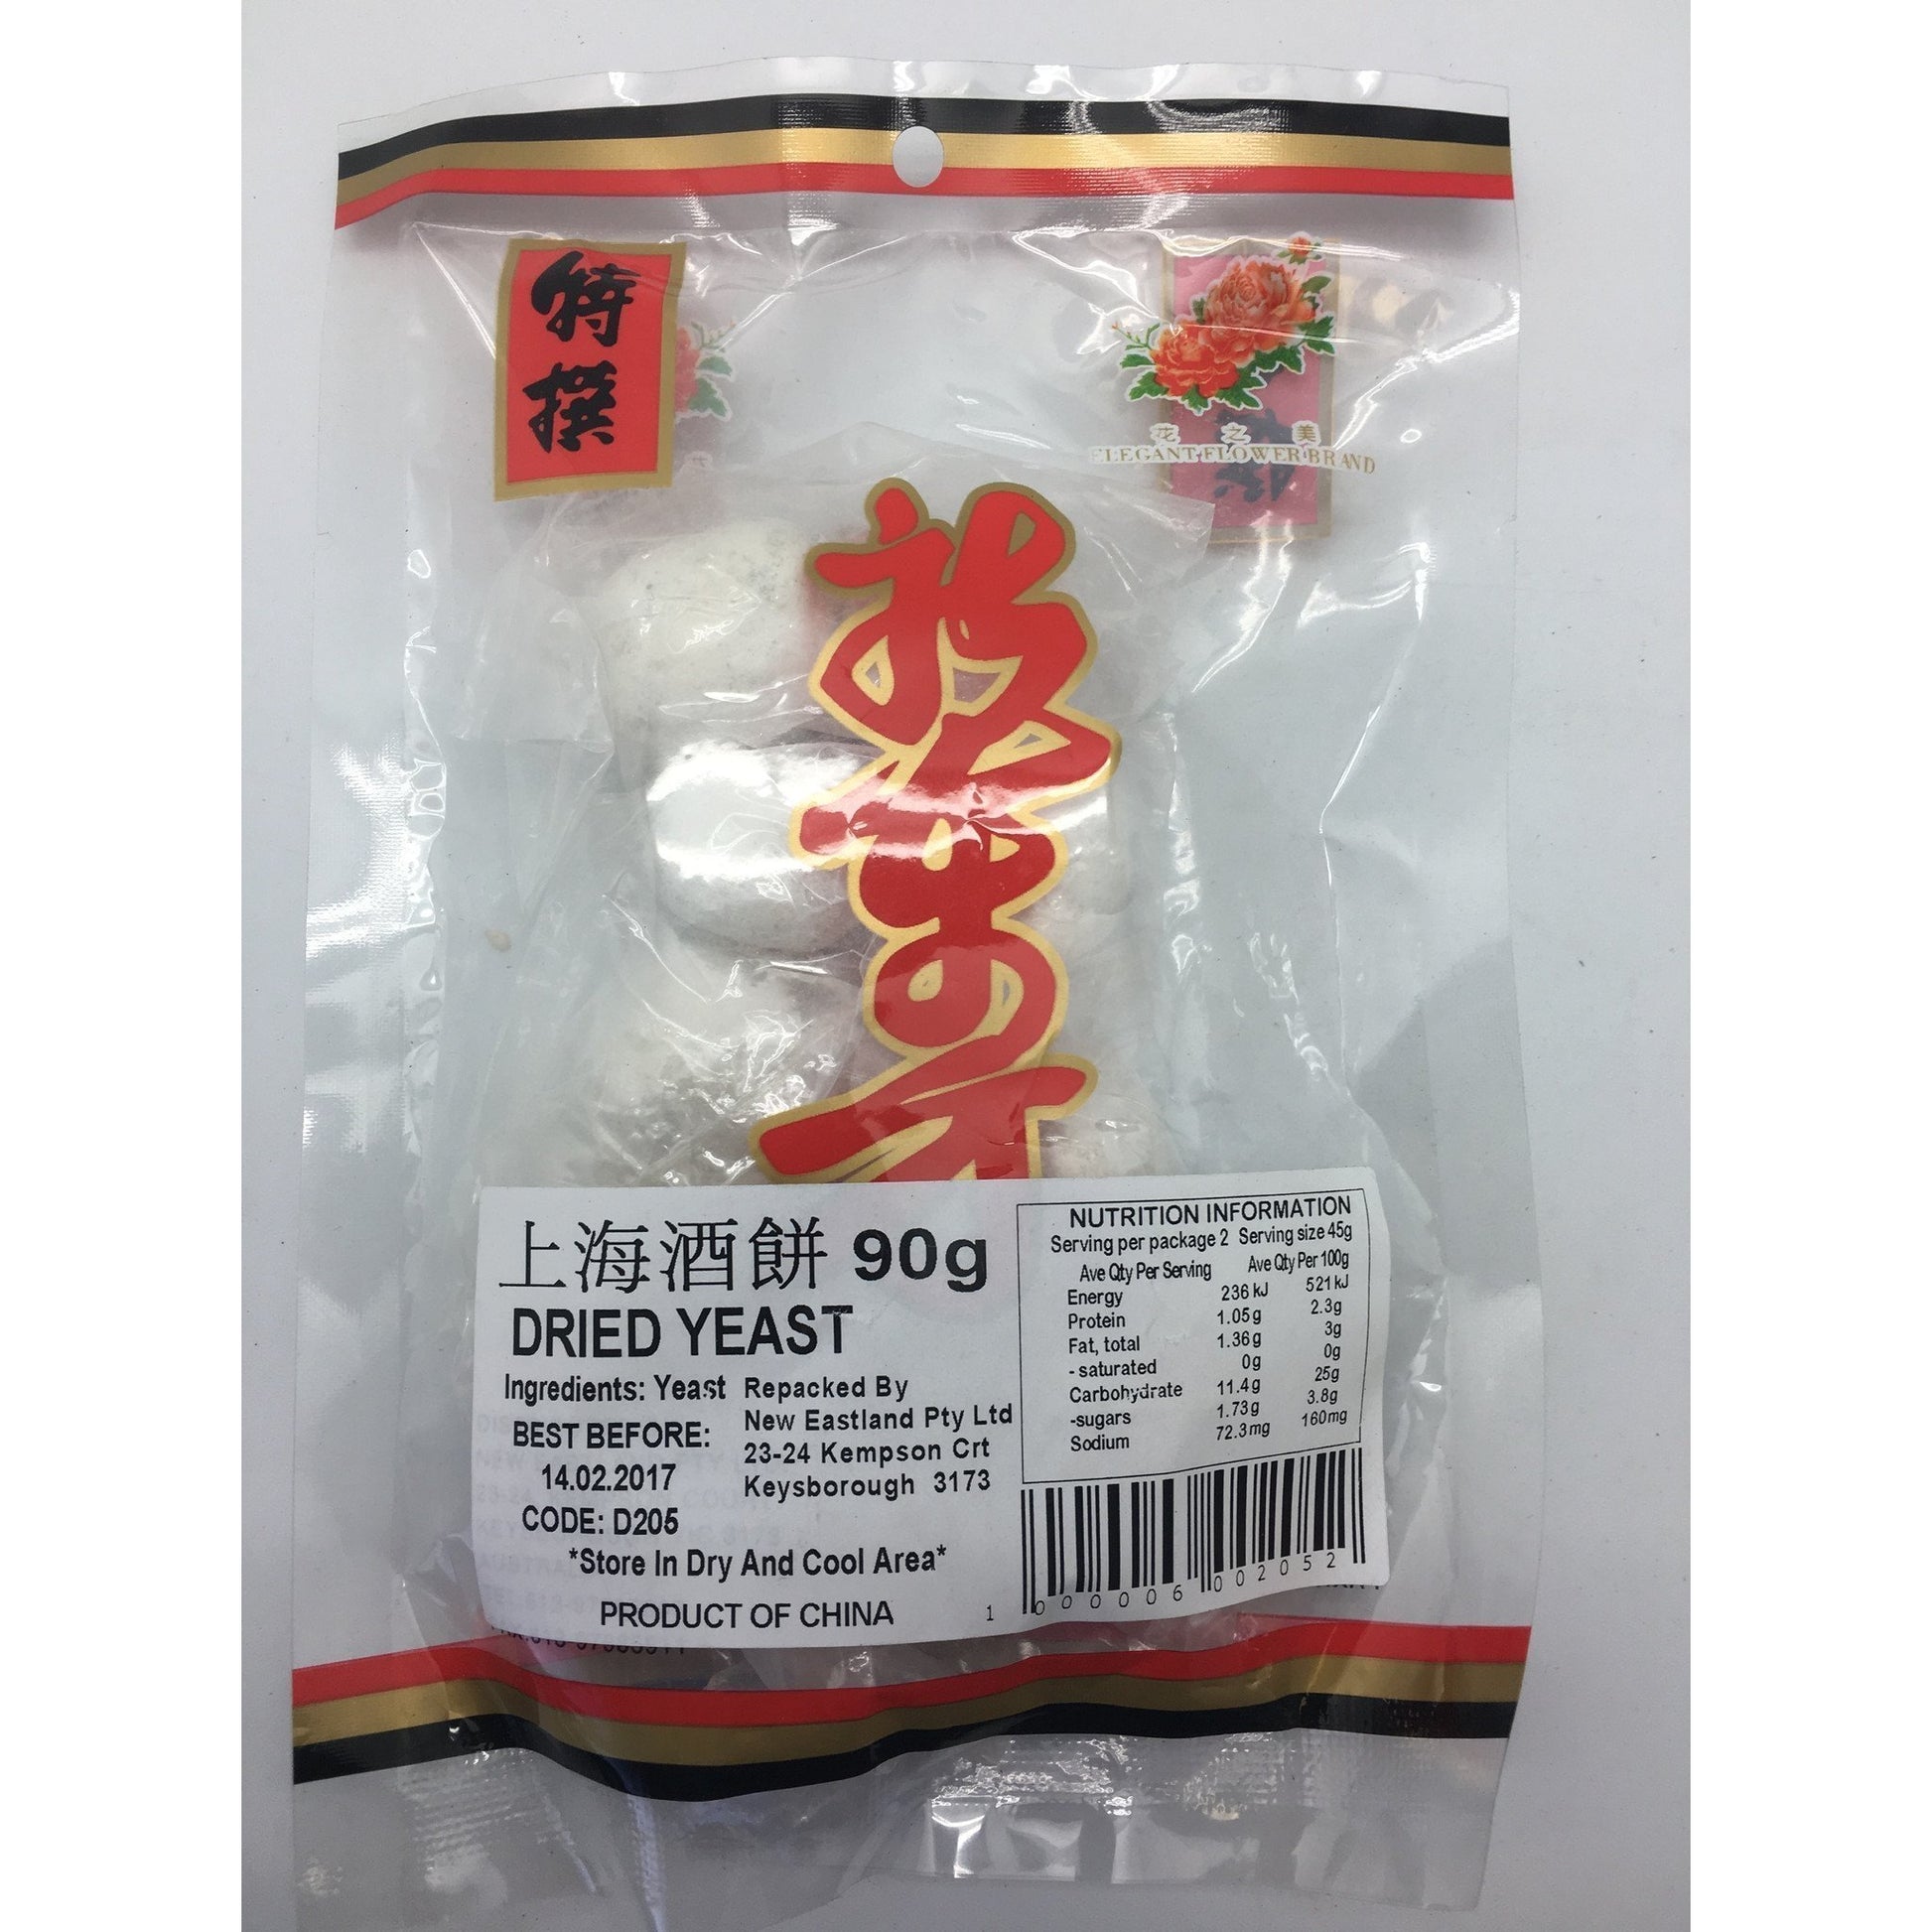 D205 New Eastland Pty Ltd - Dried Yeast 90g - 50 bags / 1 CTN - New Eastland Pty Ltd - Asian food wholesalers